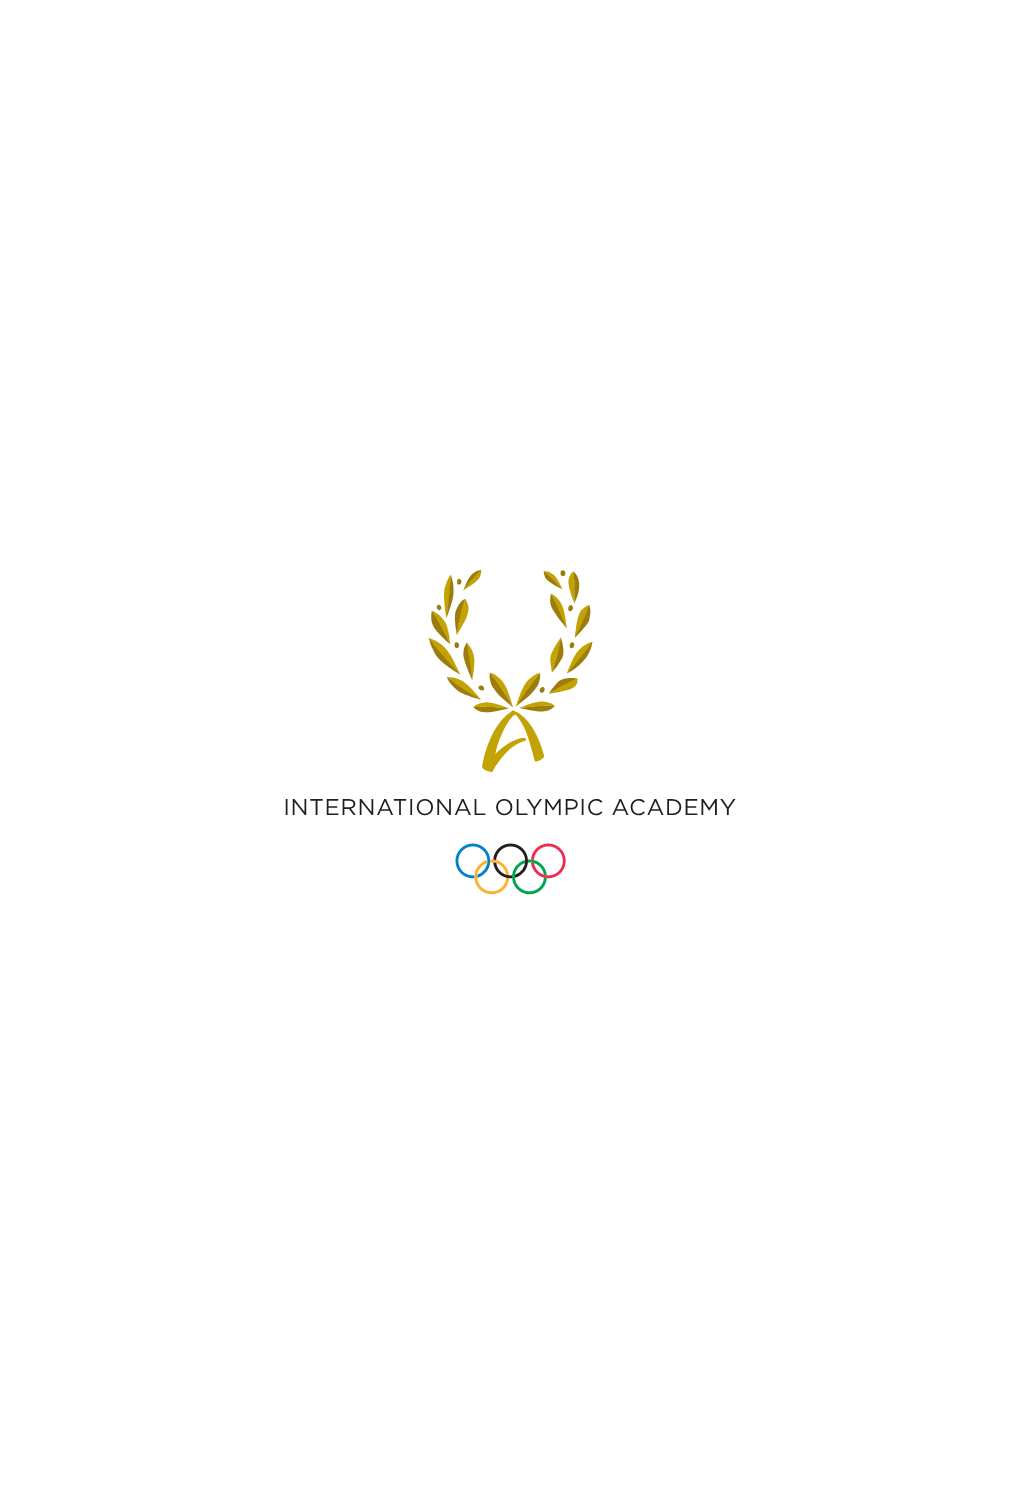 National Olympic Academies by Konstantinos Georgiadis